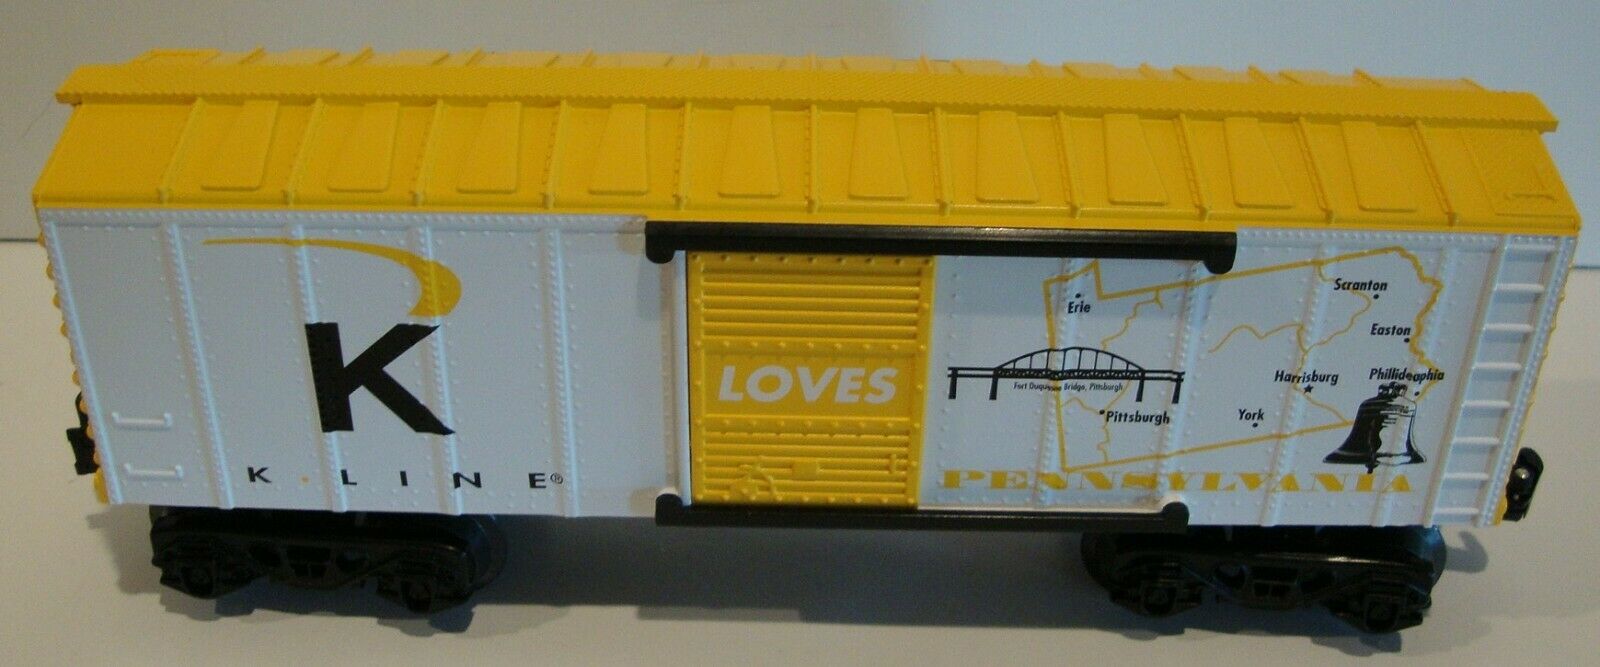 K Line Loves Pennsylvania Boxcar image